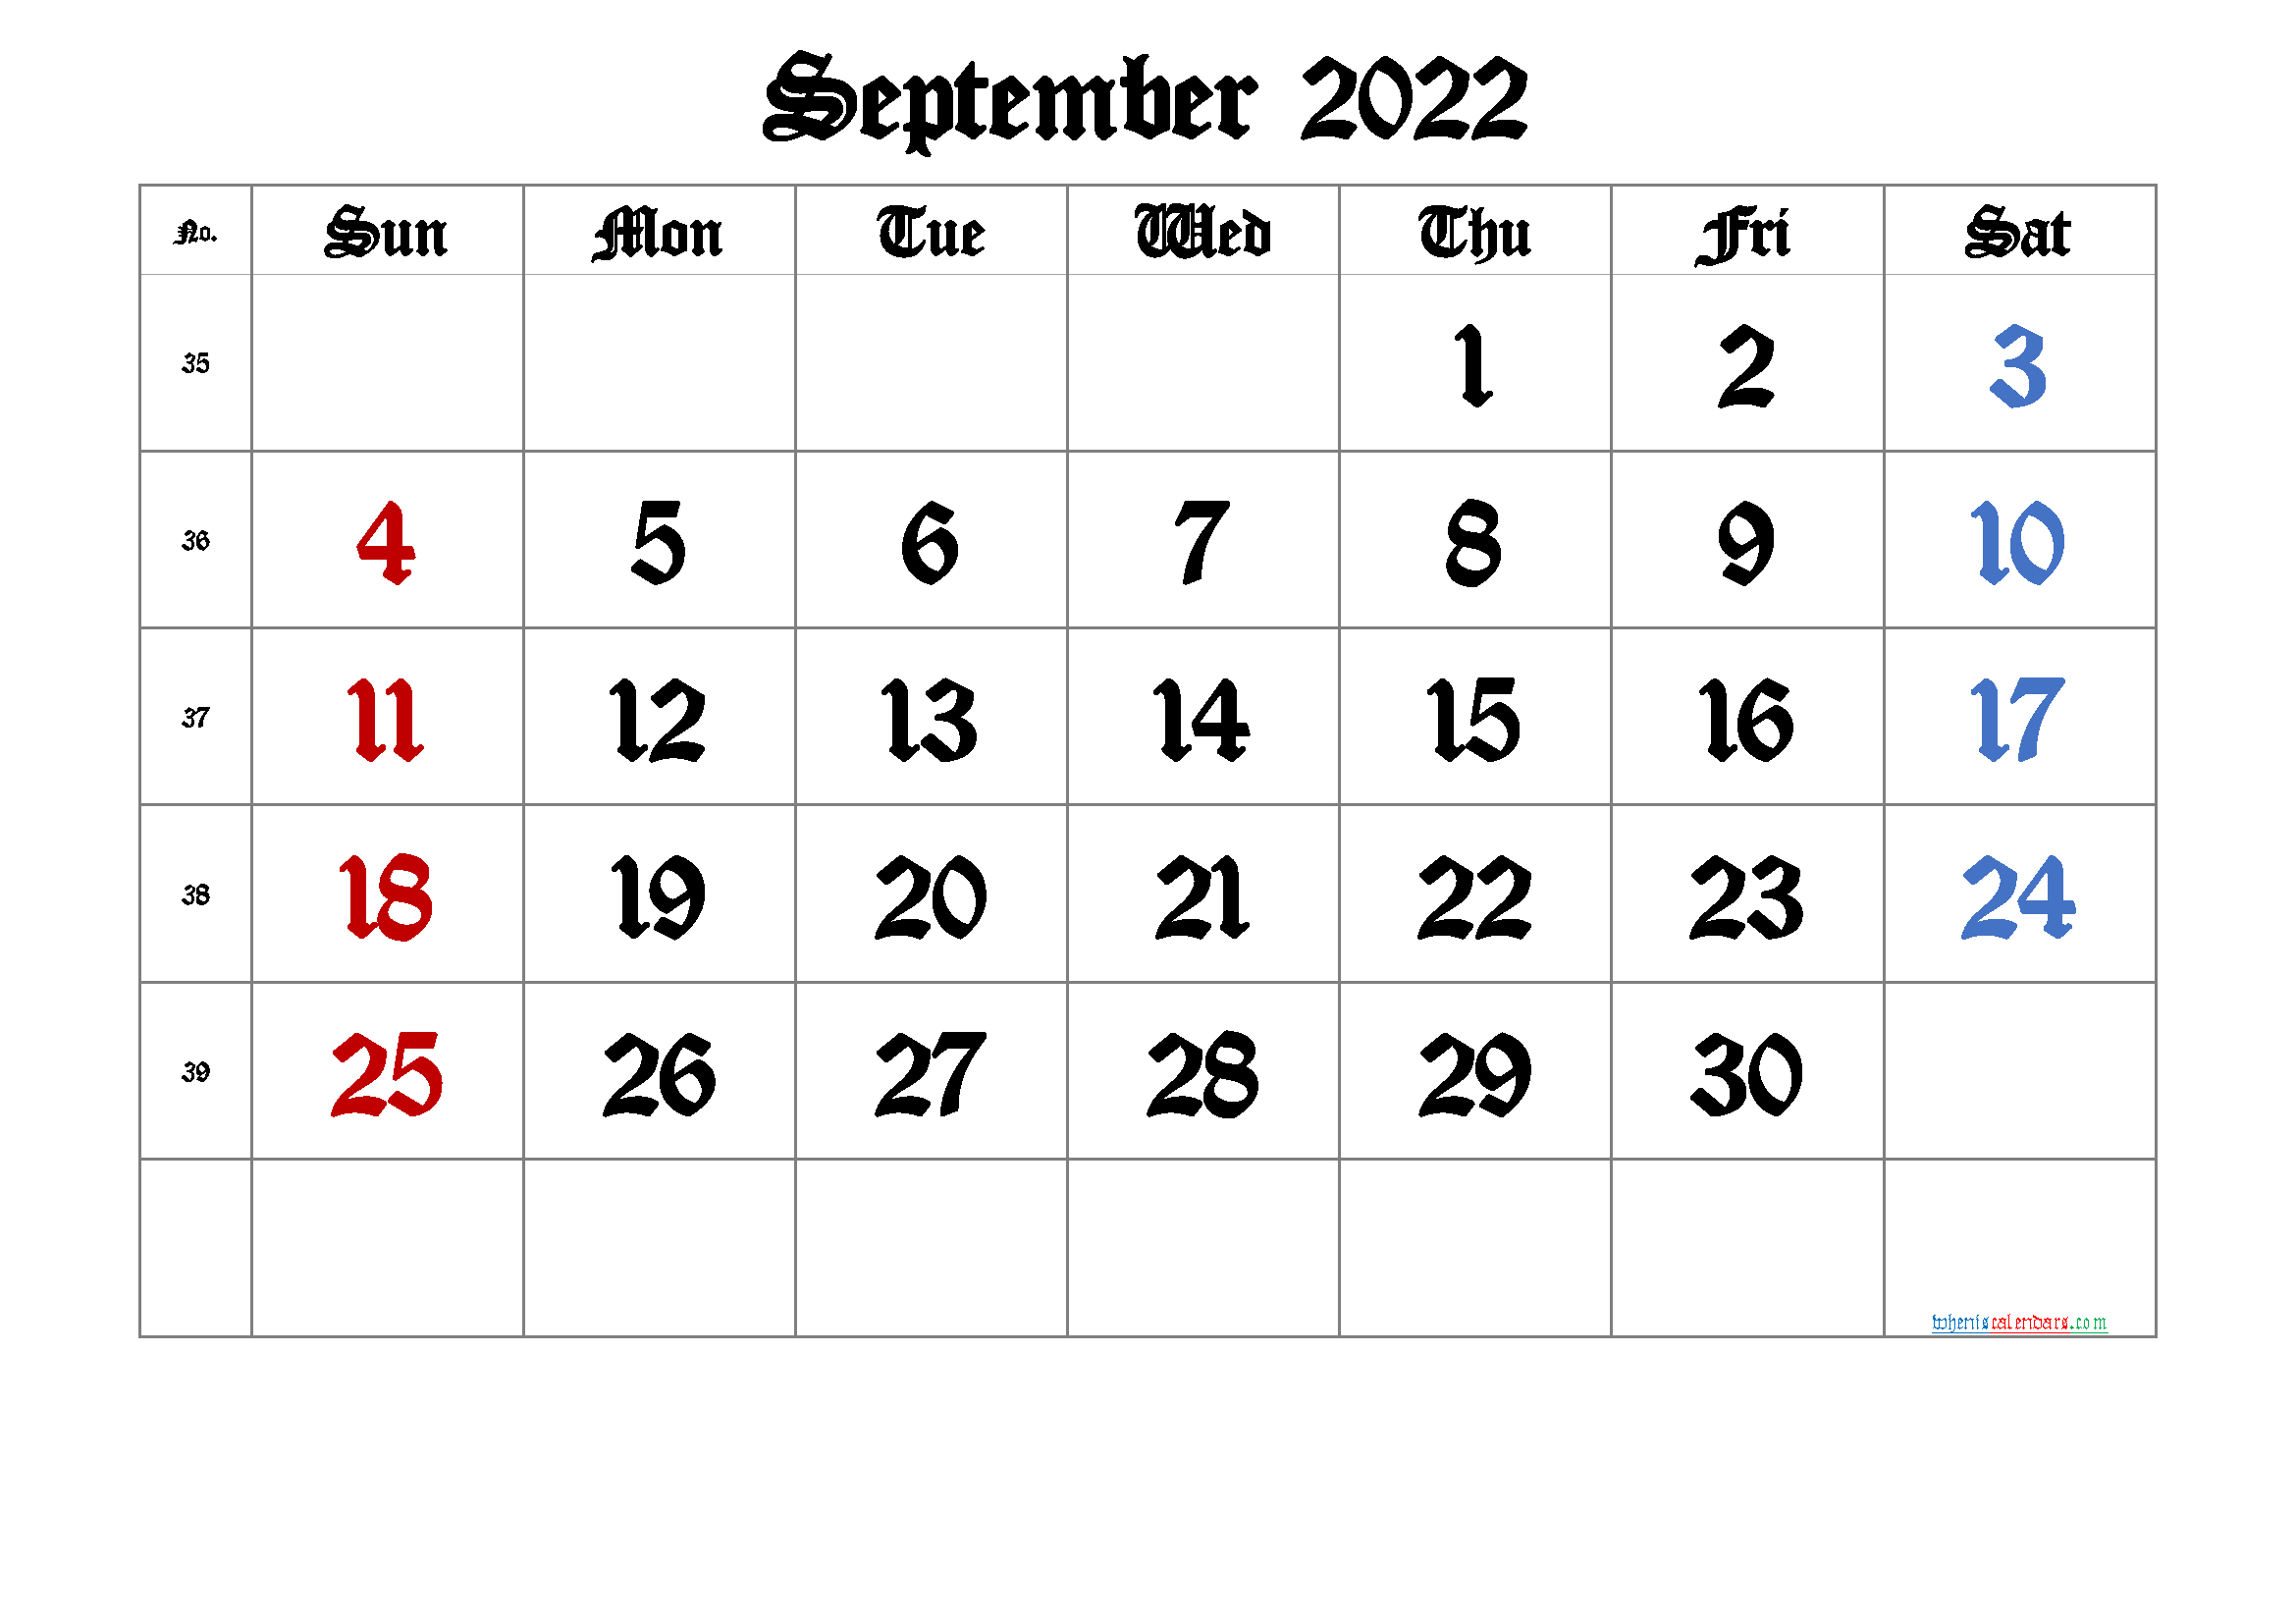 Free Printable 2022 September Calendar  Astronomy Picture Of The Day Calendar September 2022